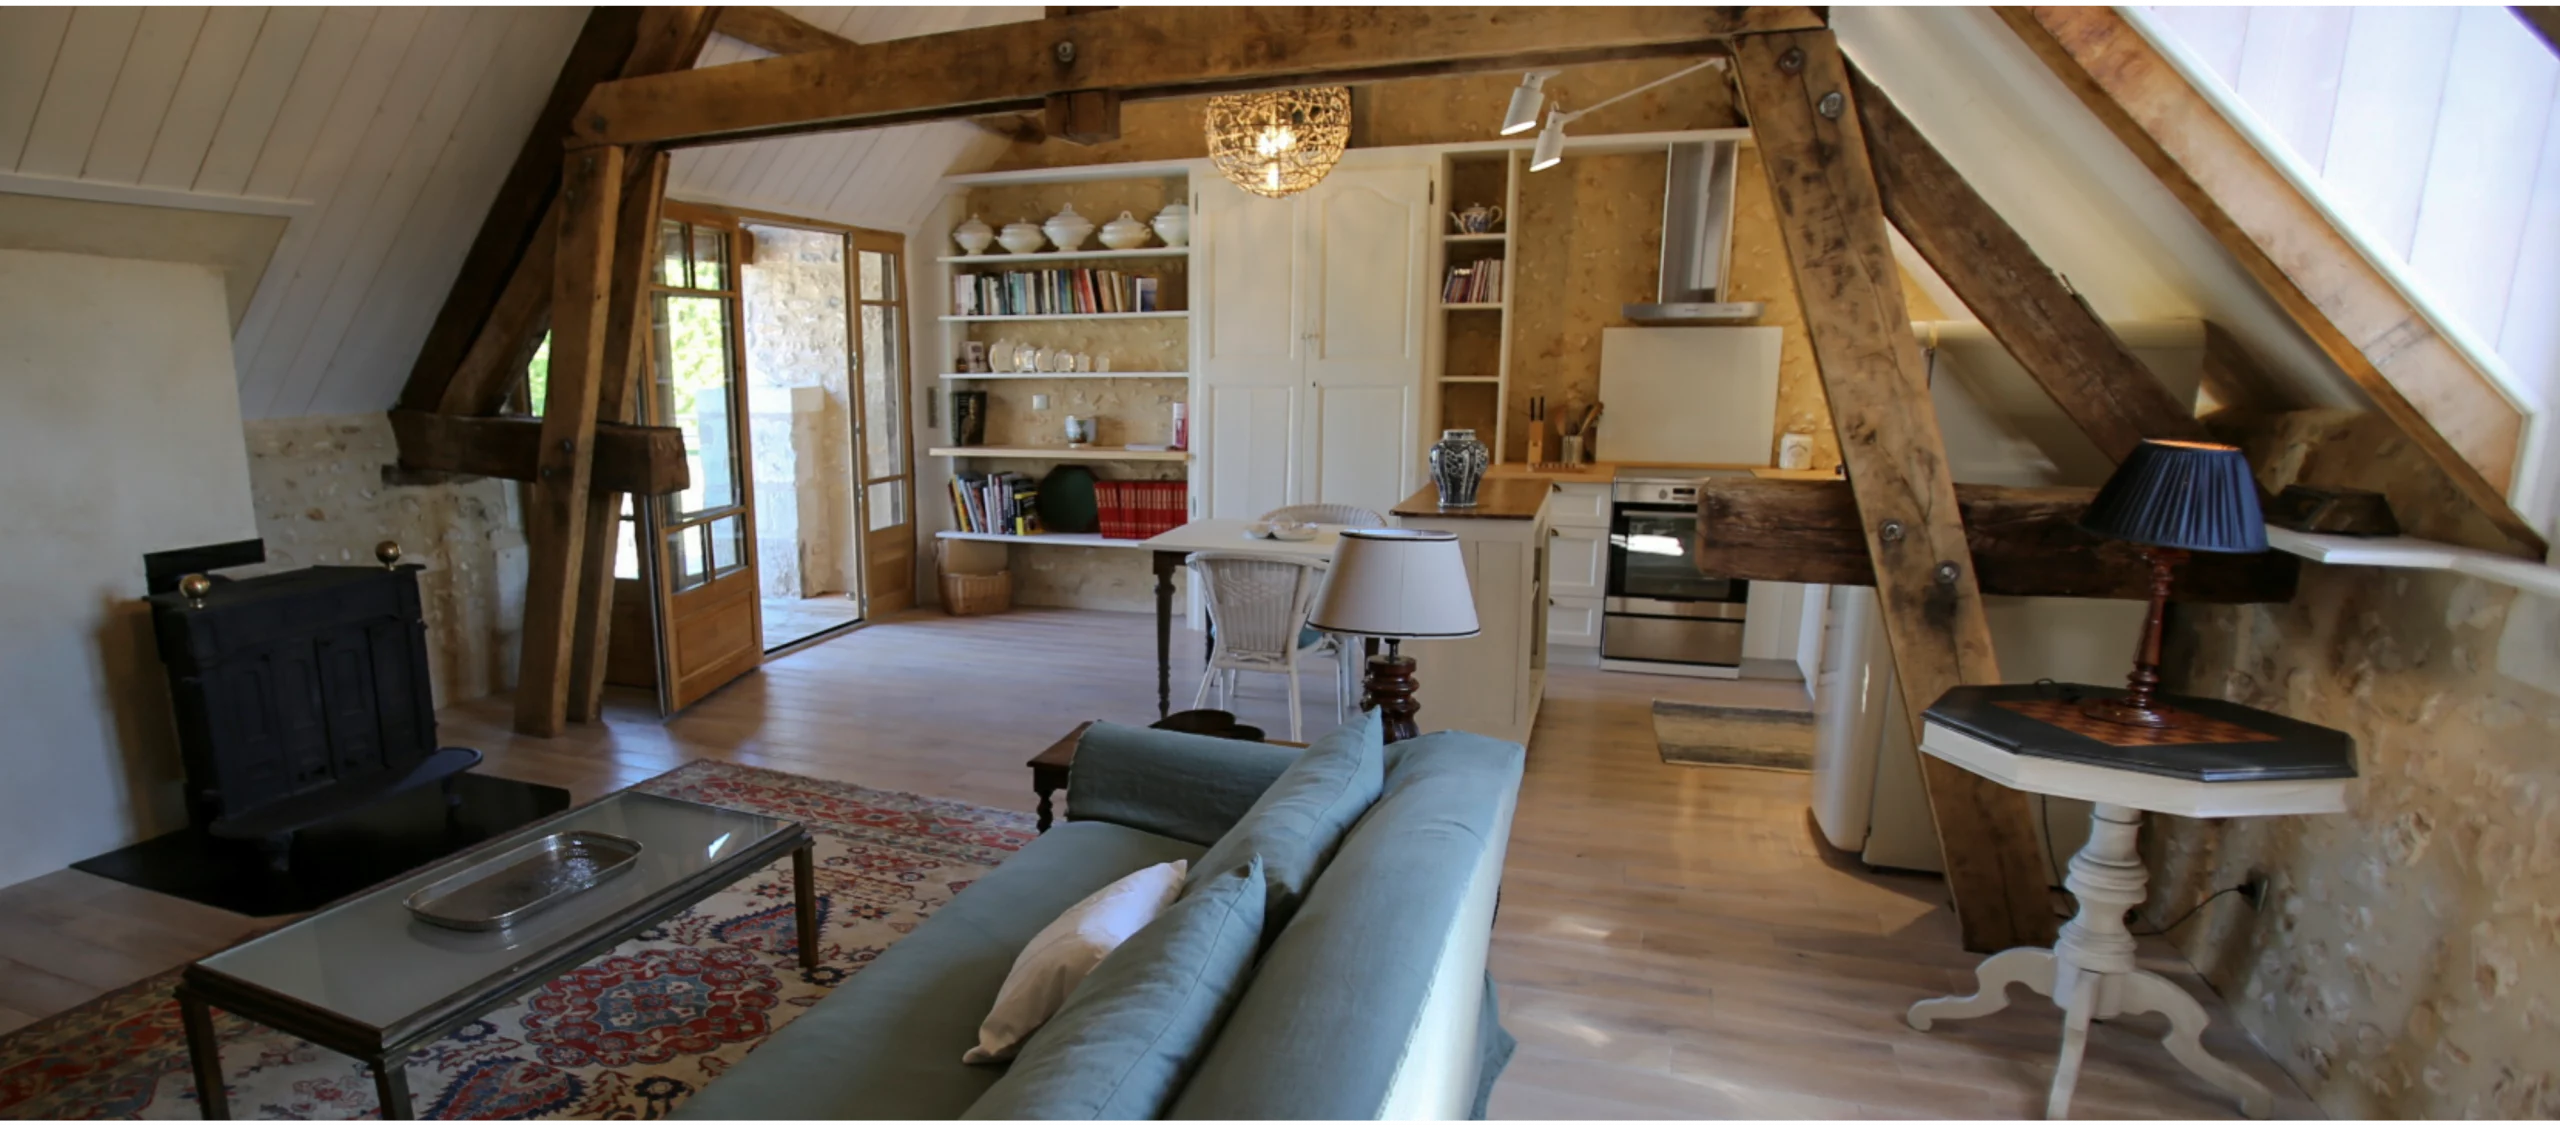 View of the living room of the gîte "le Séchoir", Manoir Beauregard in Dordogne